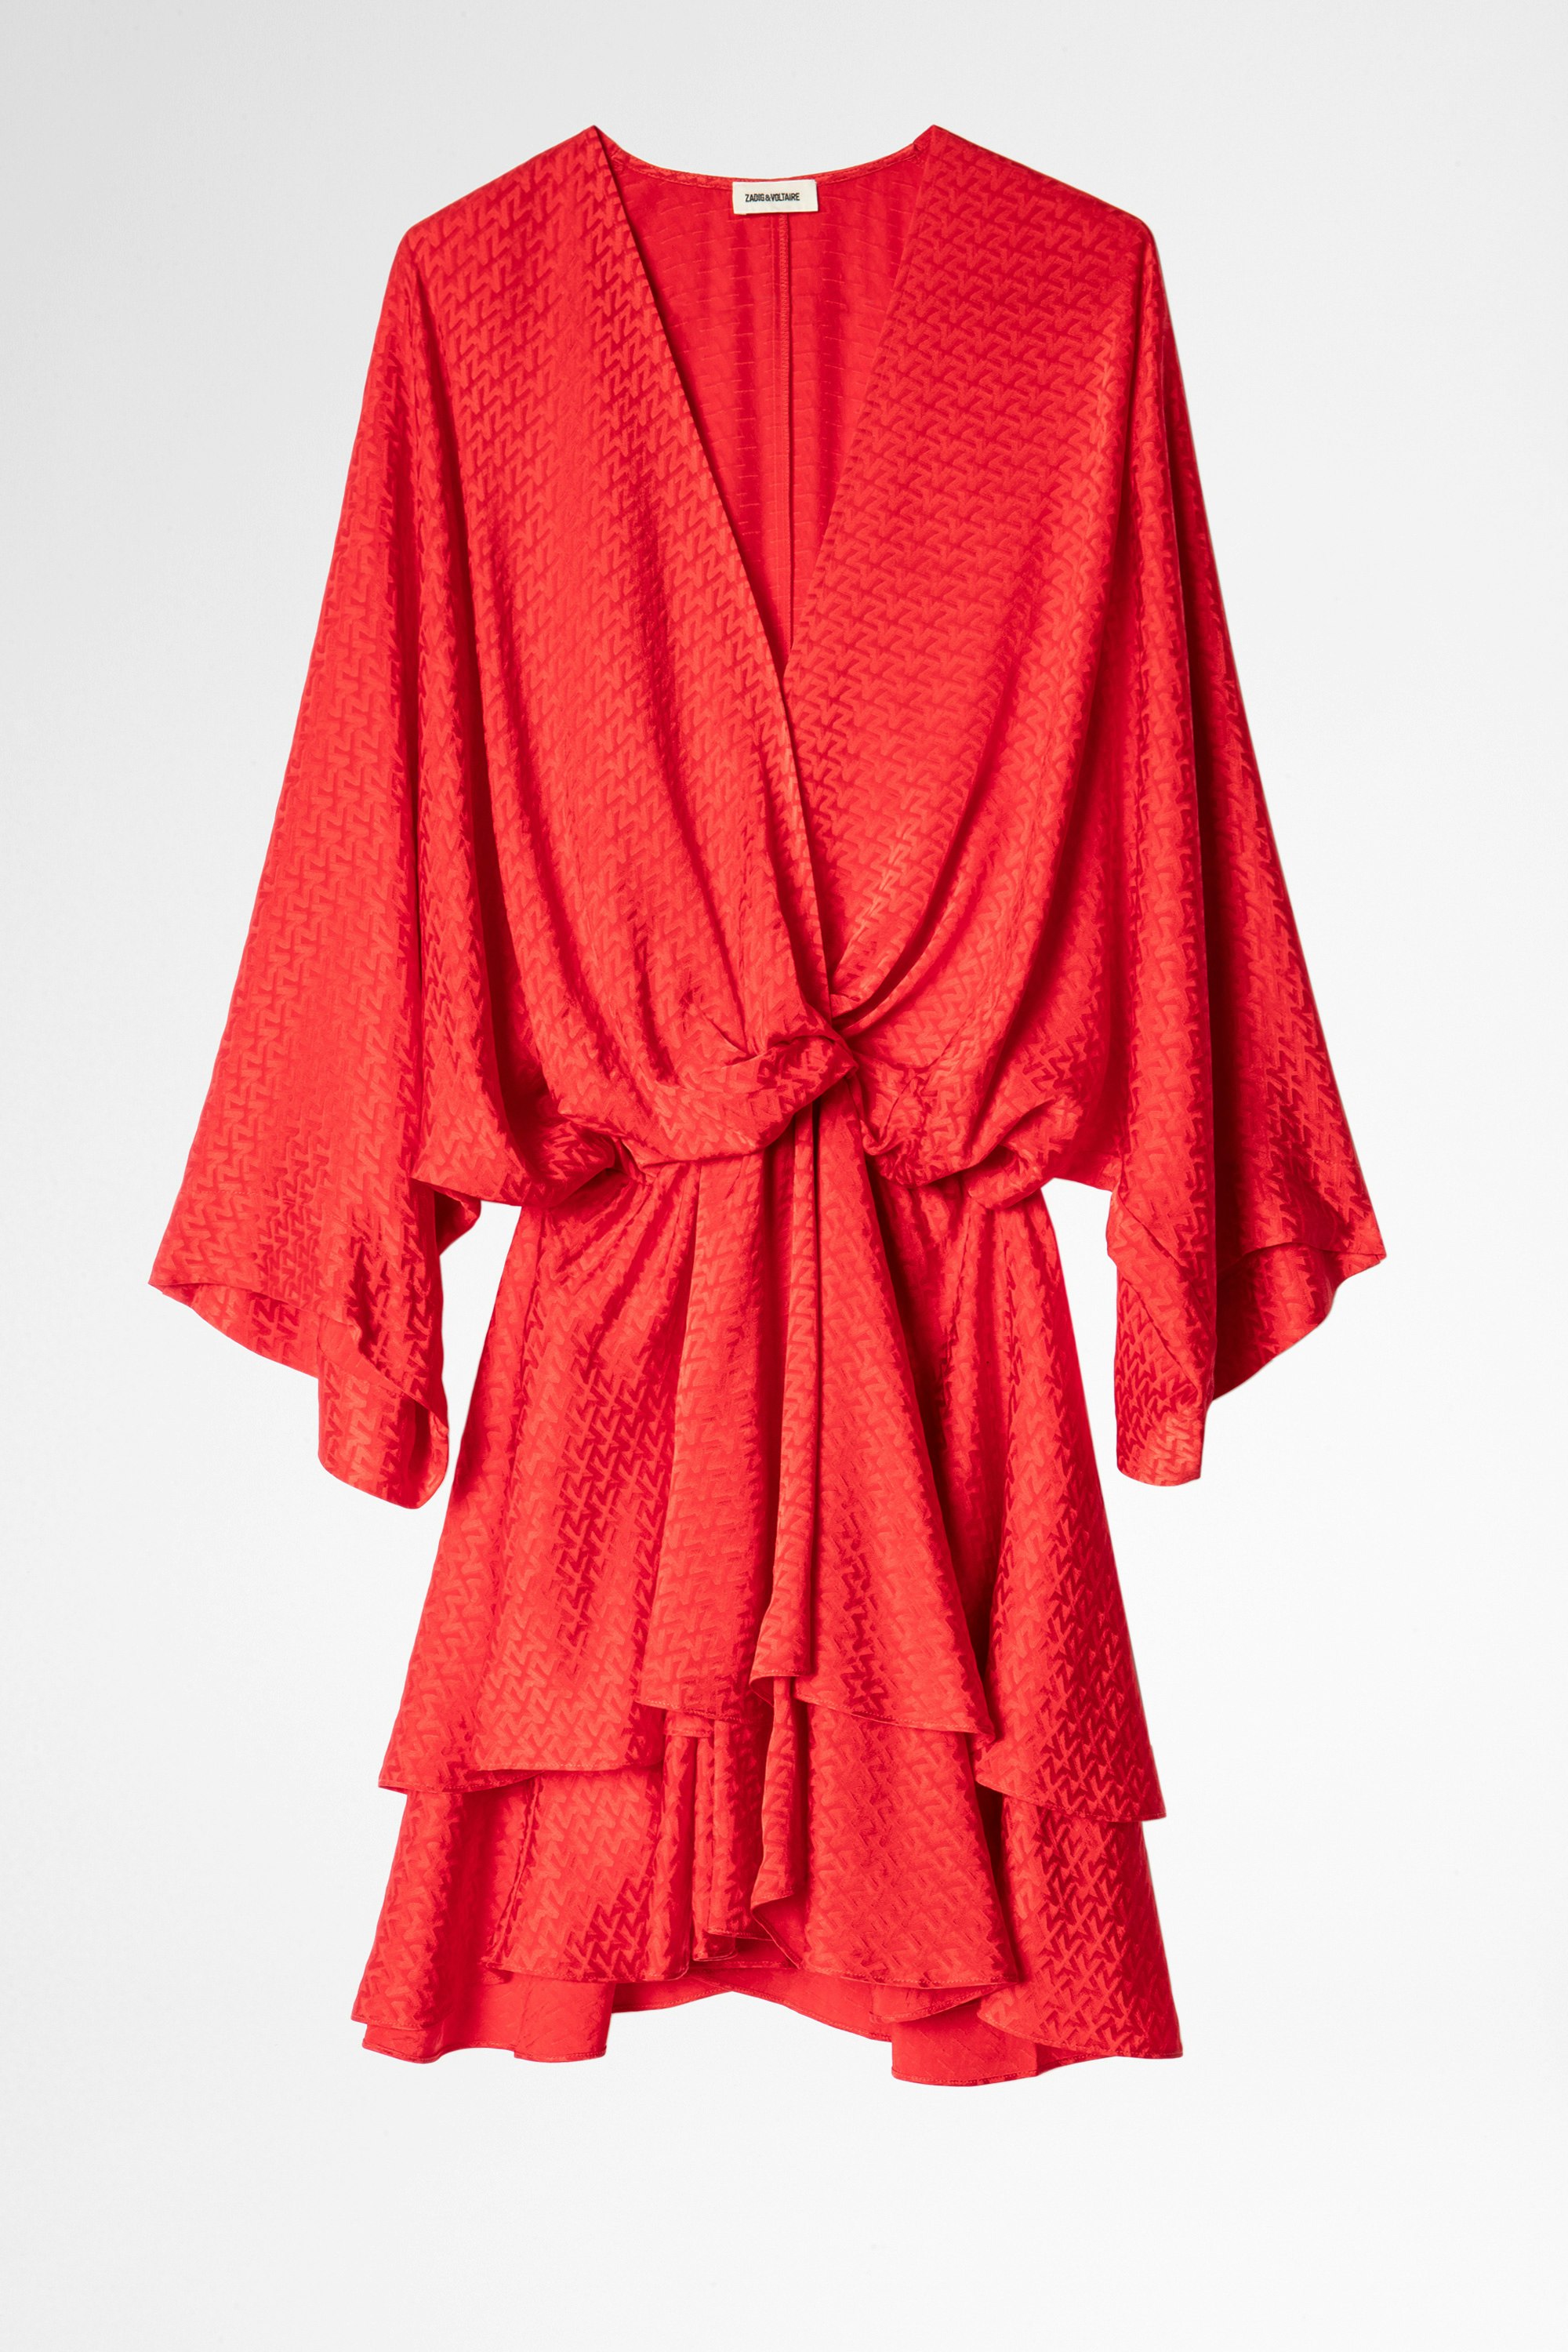 Hailey Jac ZV Silk Dress Women’s red silk jacquard mini dress.